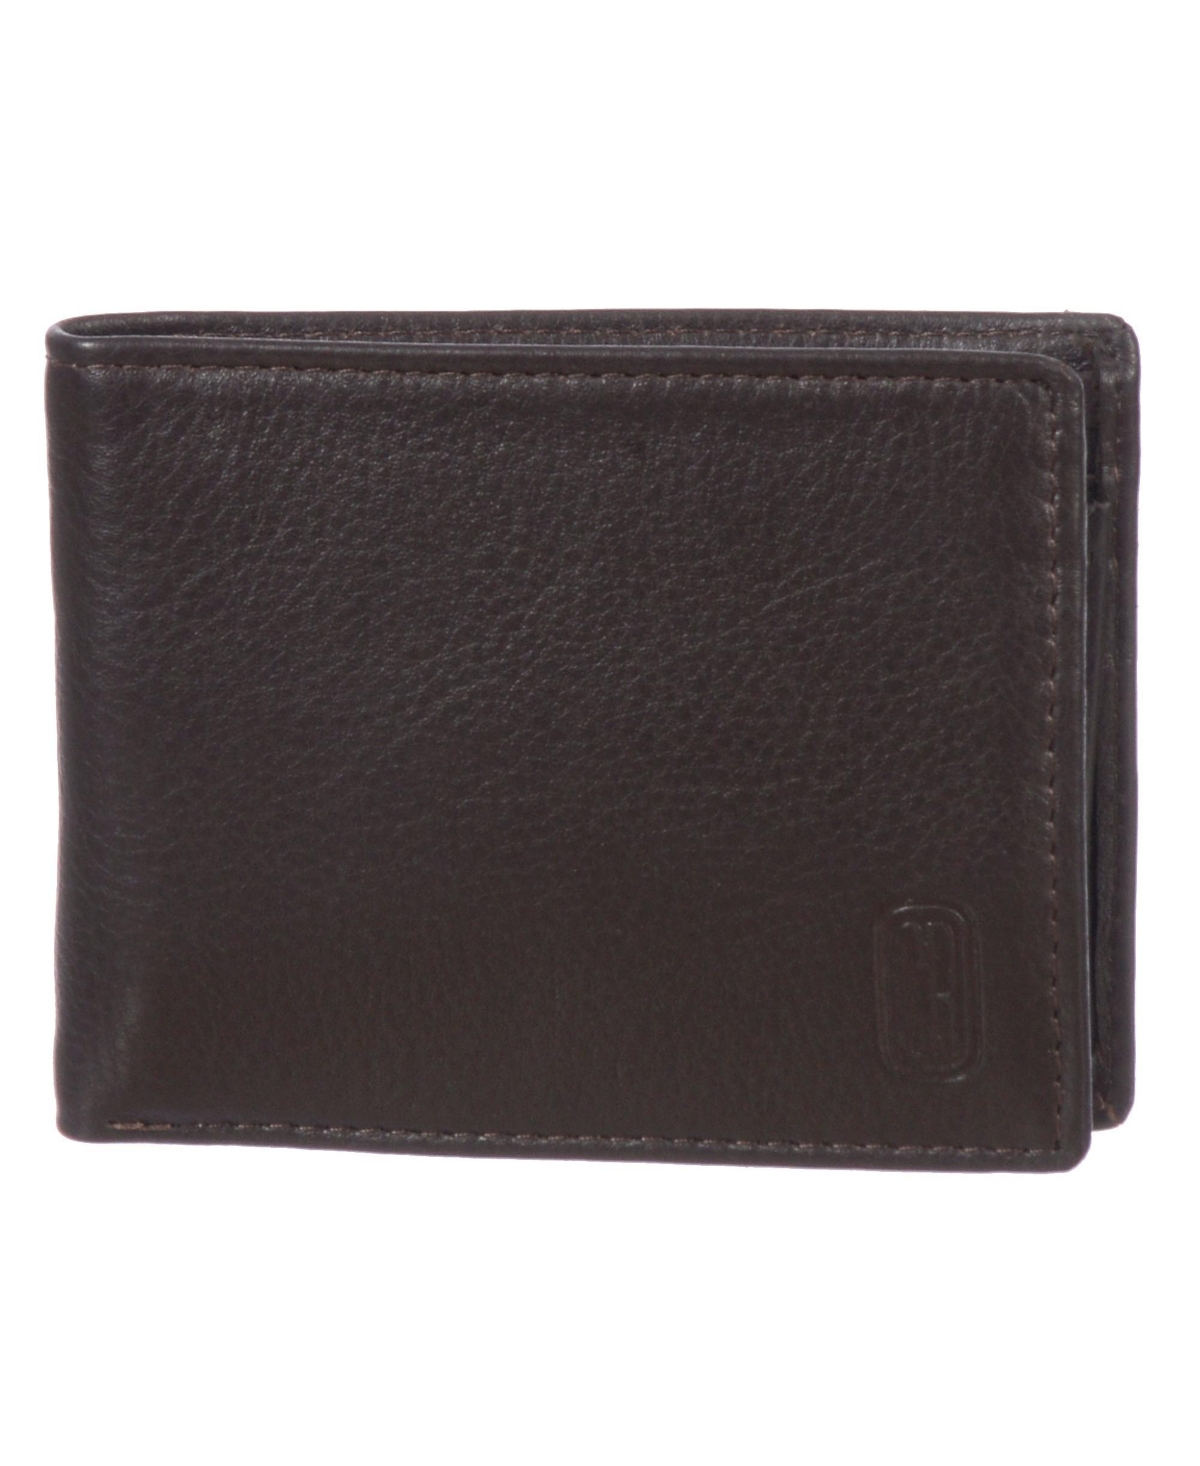 Men's Leather Slim Fold Wallet - Brown